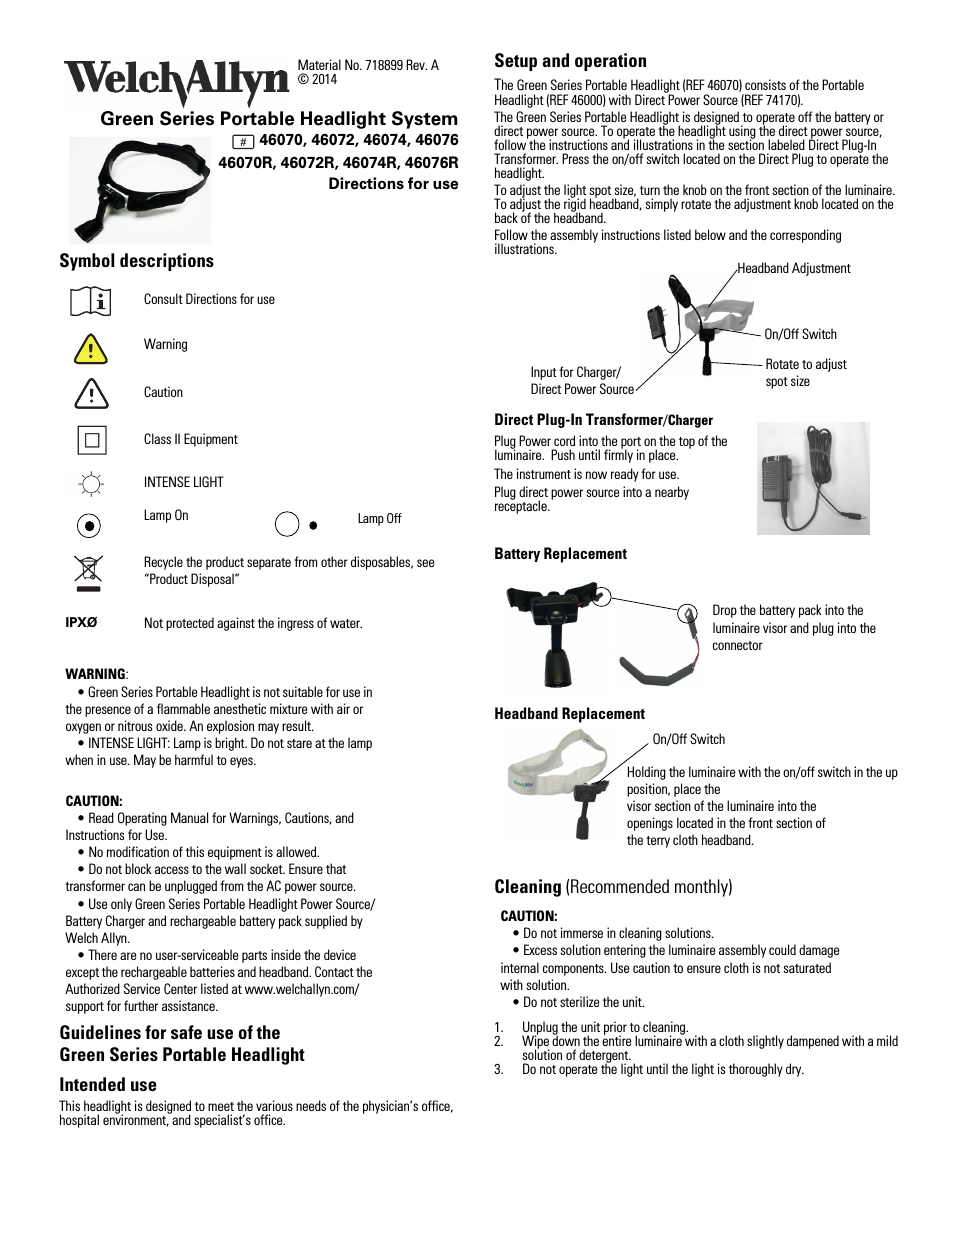 4607x Green Series Portable Headlight System - User Manual